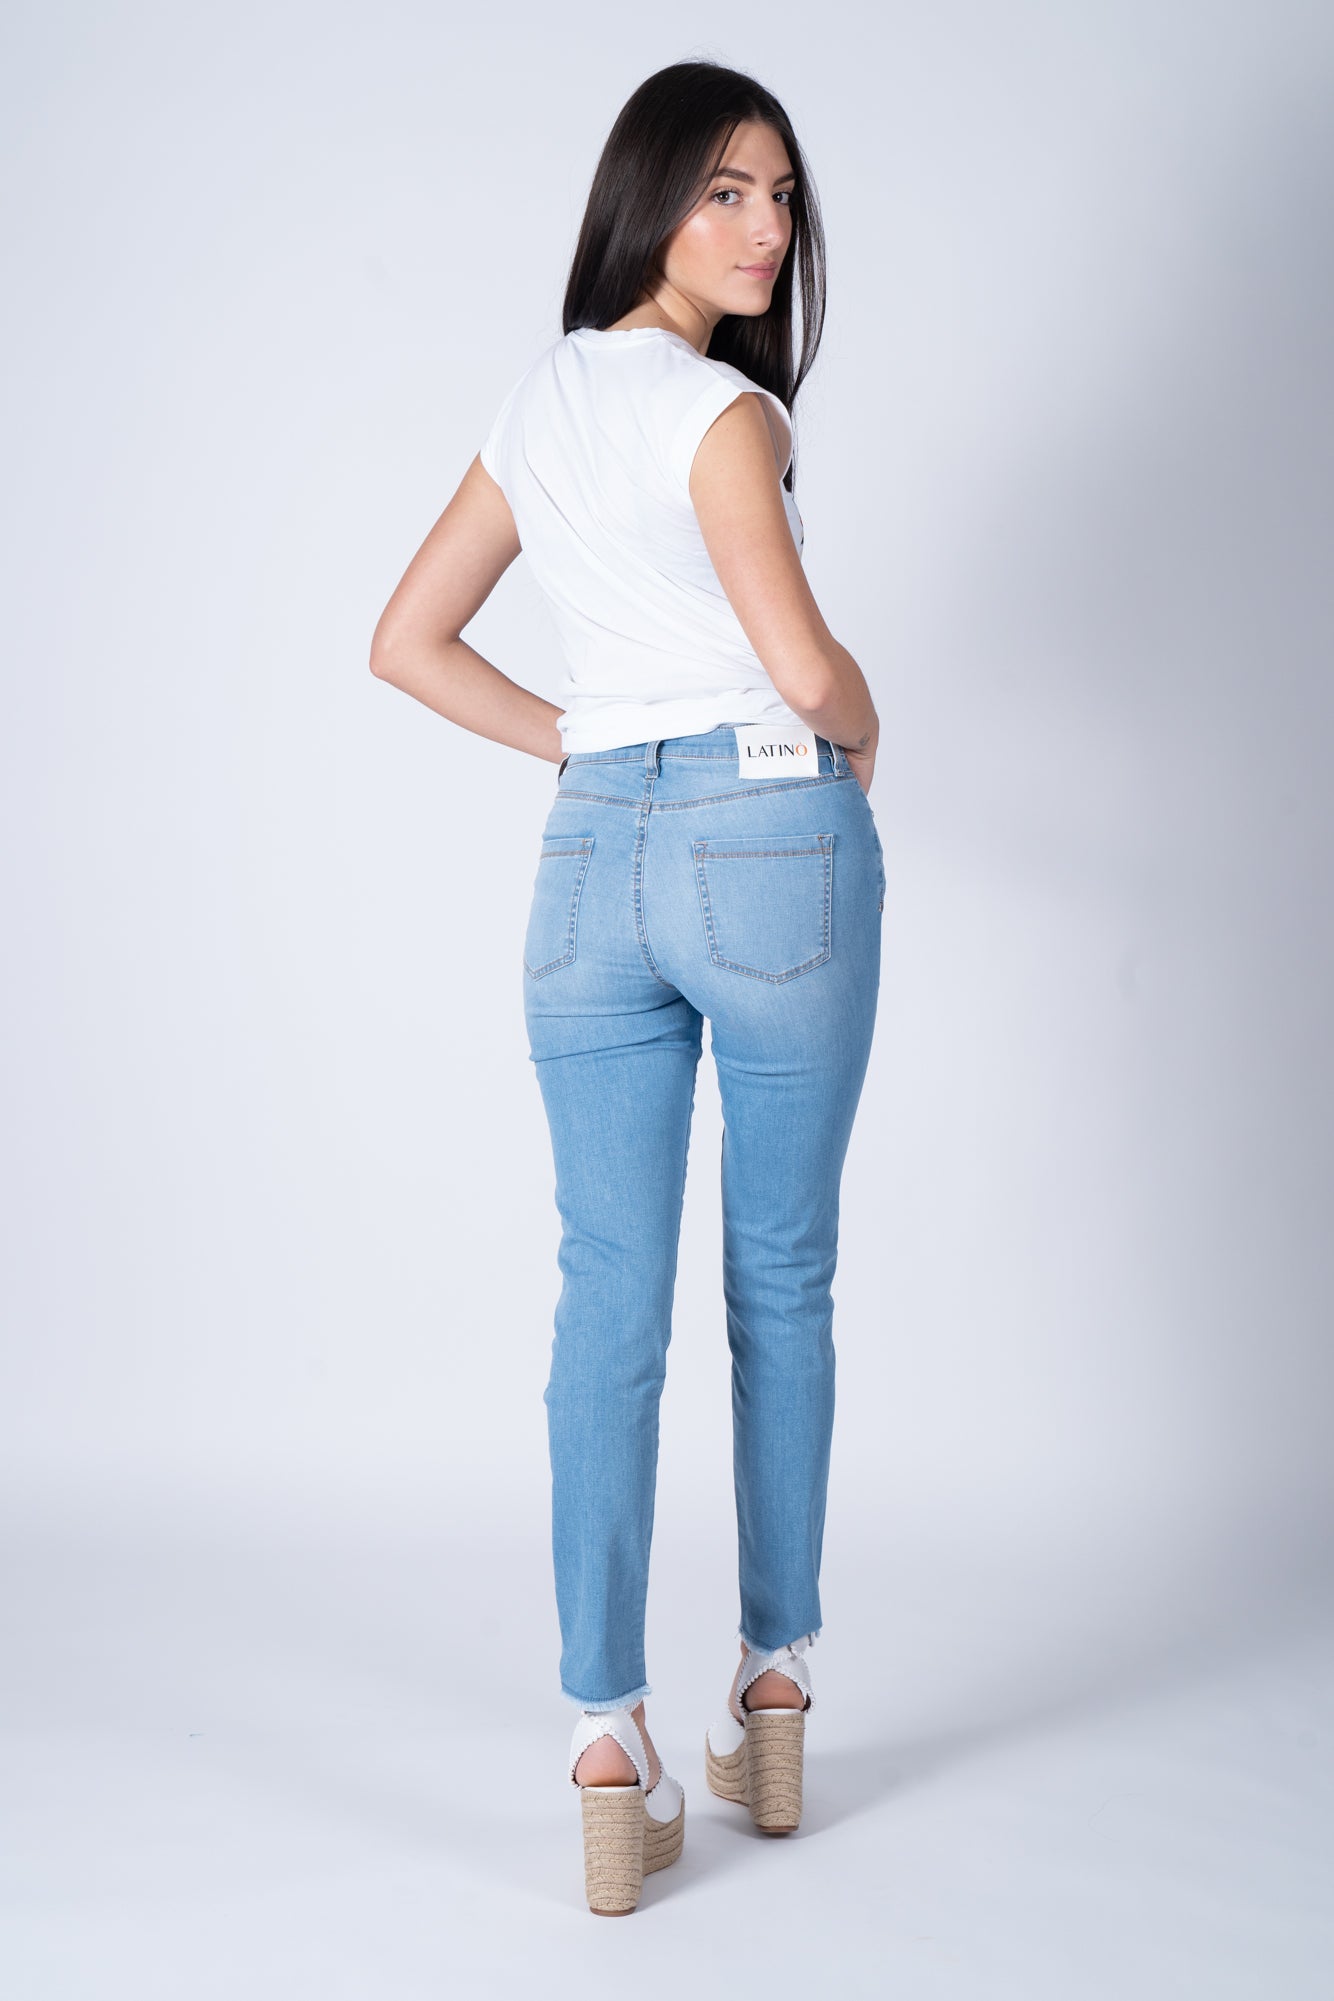 Latino' Jeans Pantalone Denim Chiaro Donna-3